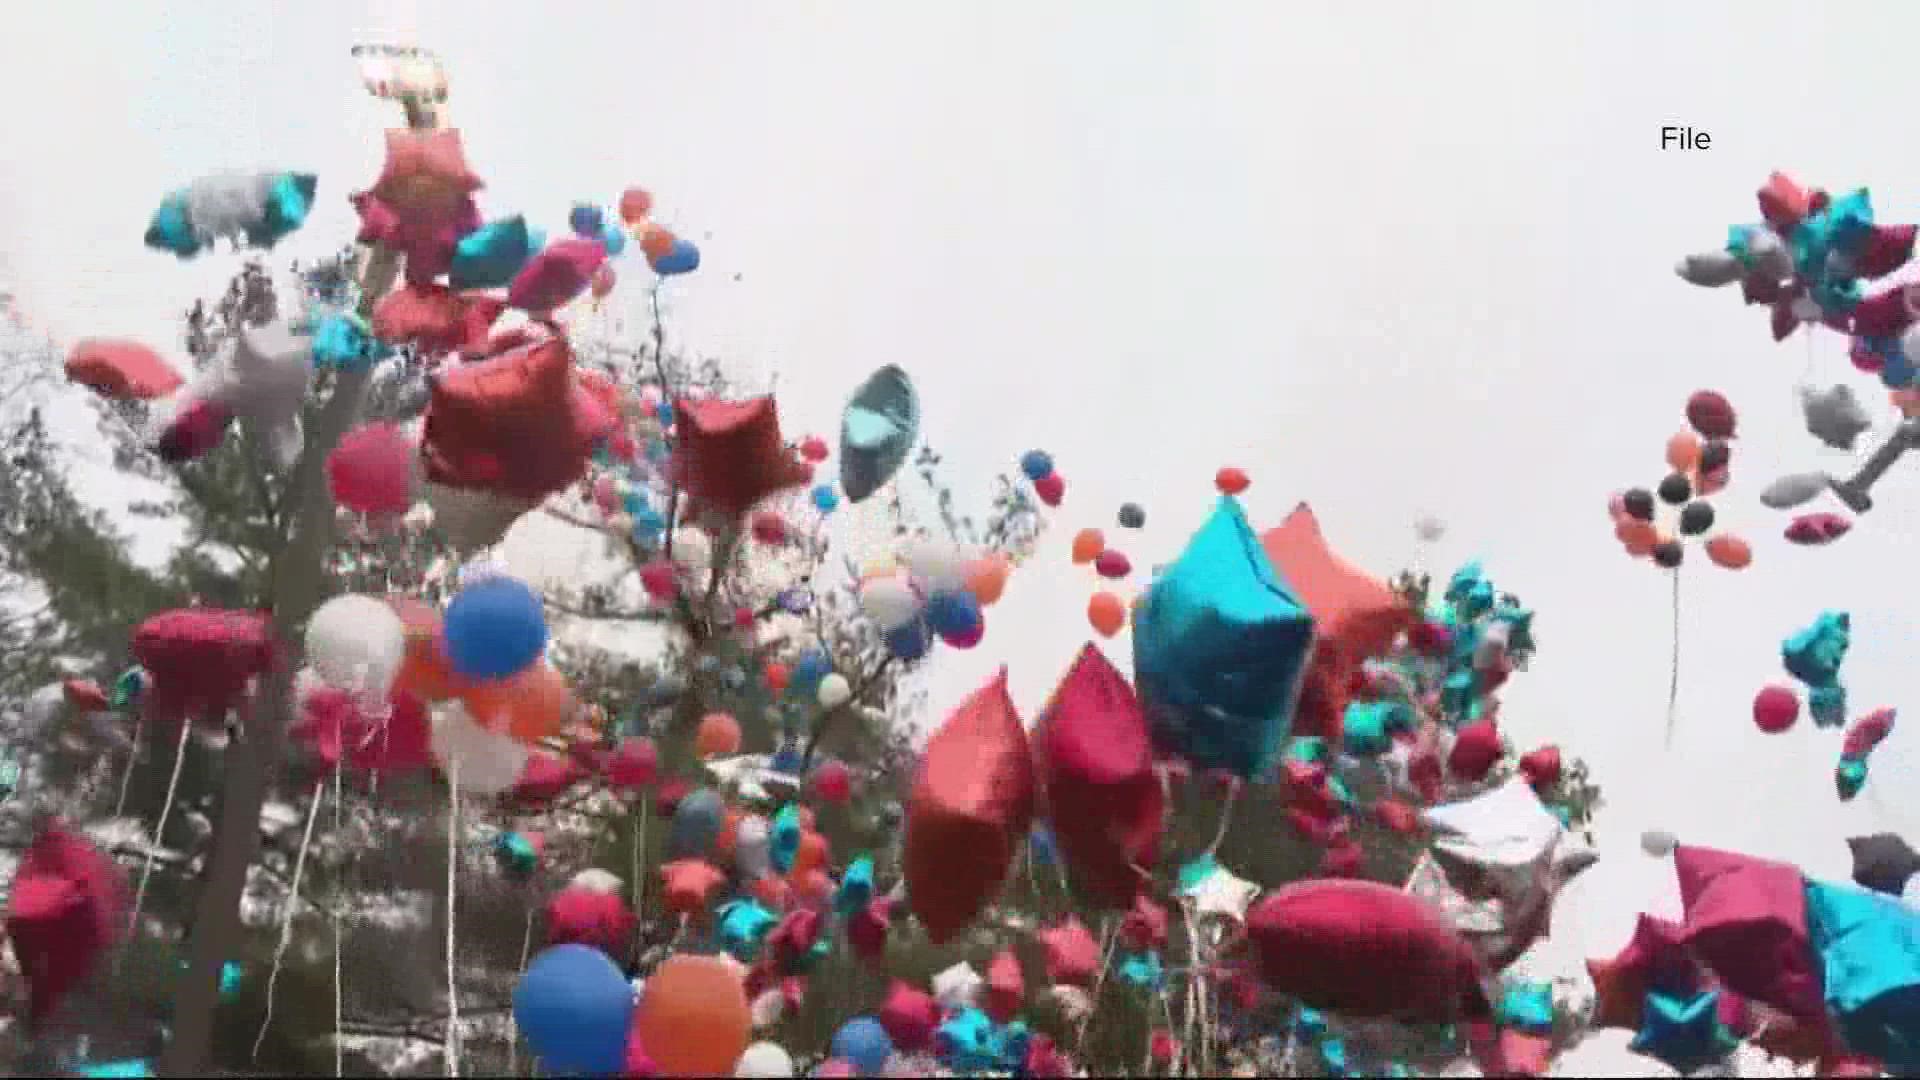 Atlantic, Neptune and Fernandina Beach already outlaw balloon releases.